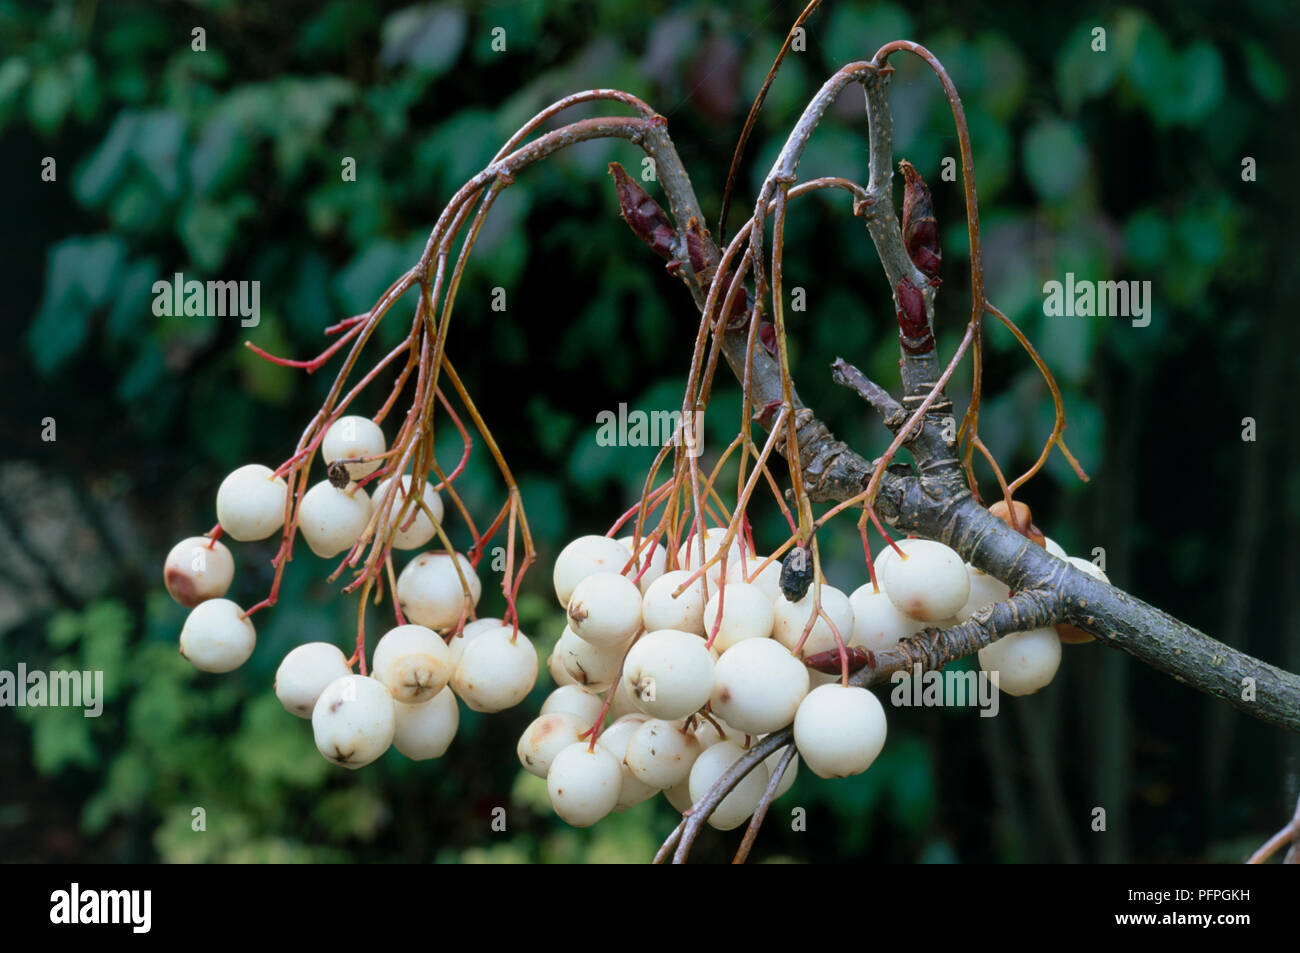 Sorbus cashmiriana (Kashmir Rowan) with white pome on hanging stems, close-up Stock Photo